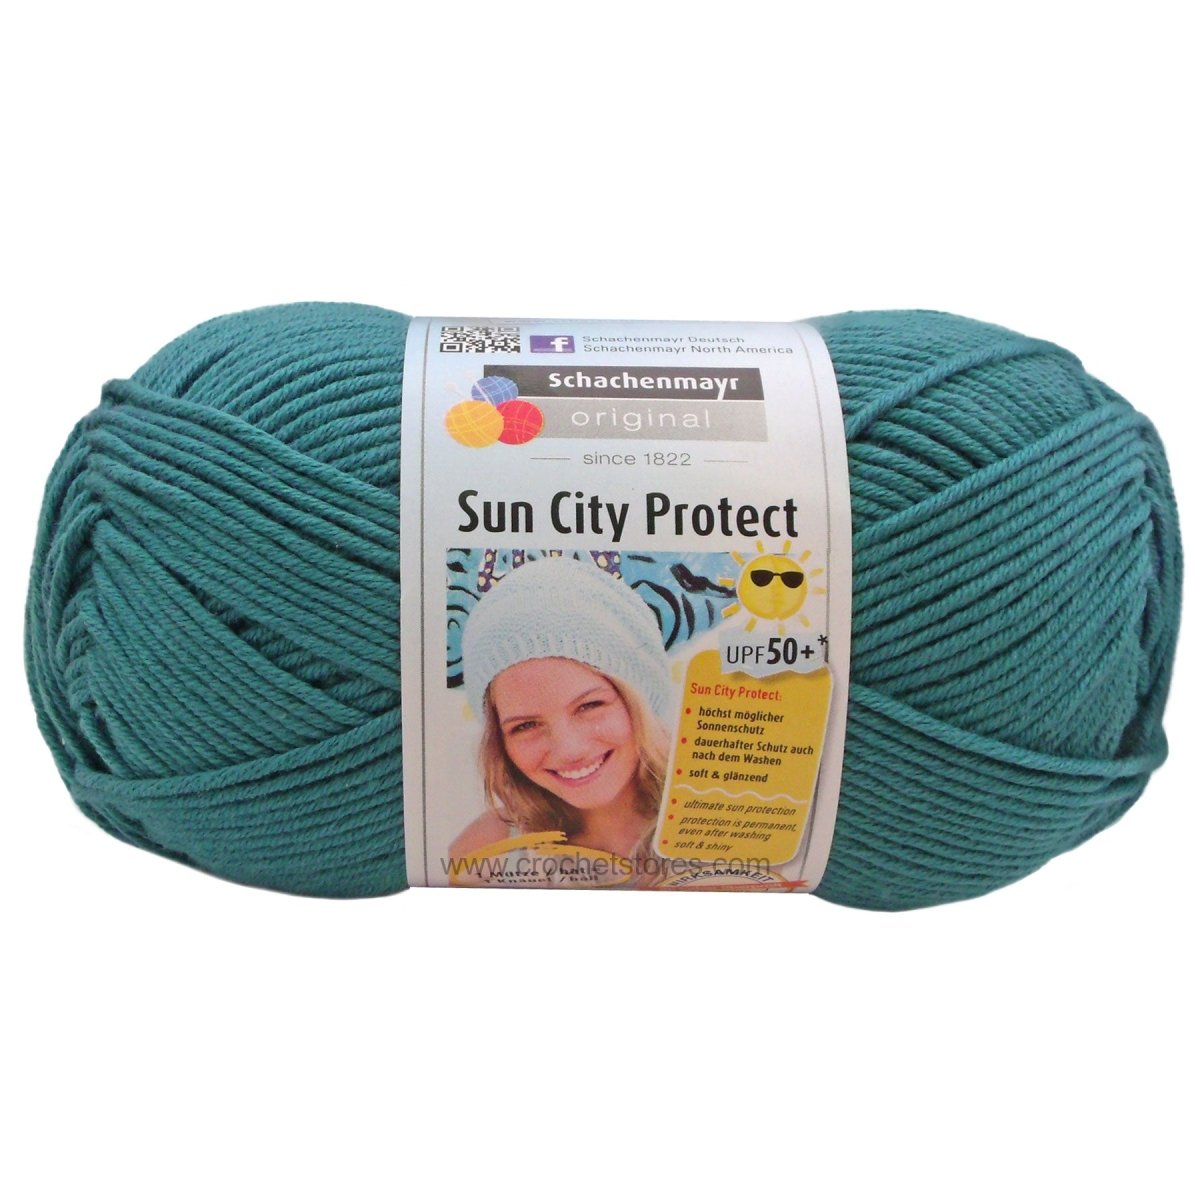 SUN CITY PROTECT - Crochetstores9807778-4744053859018920